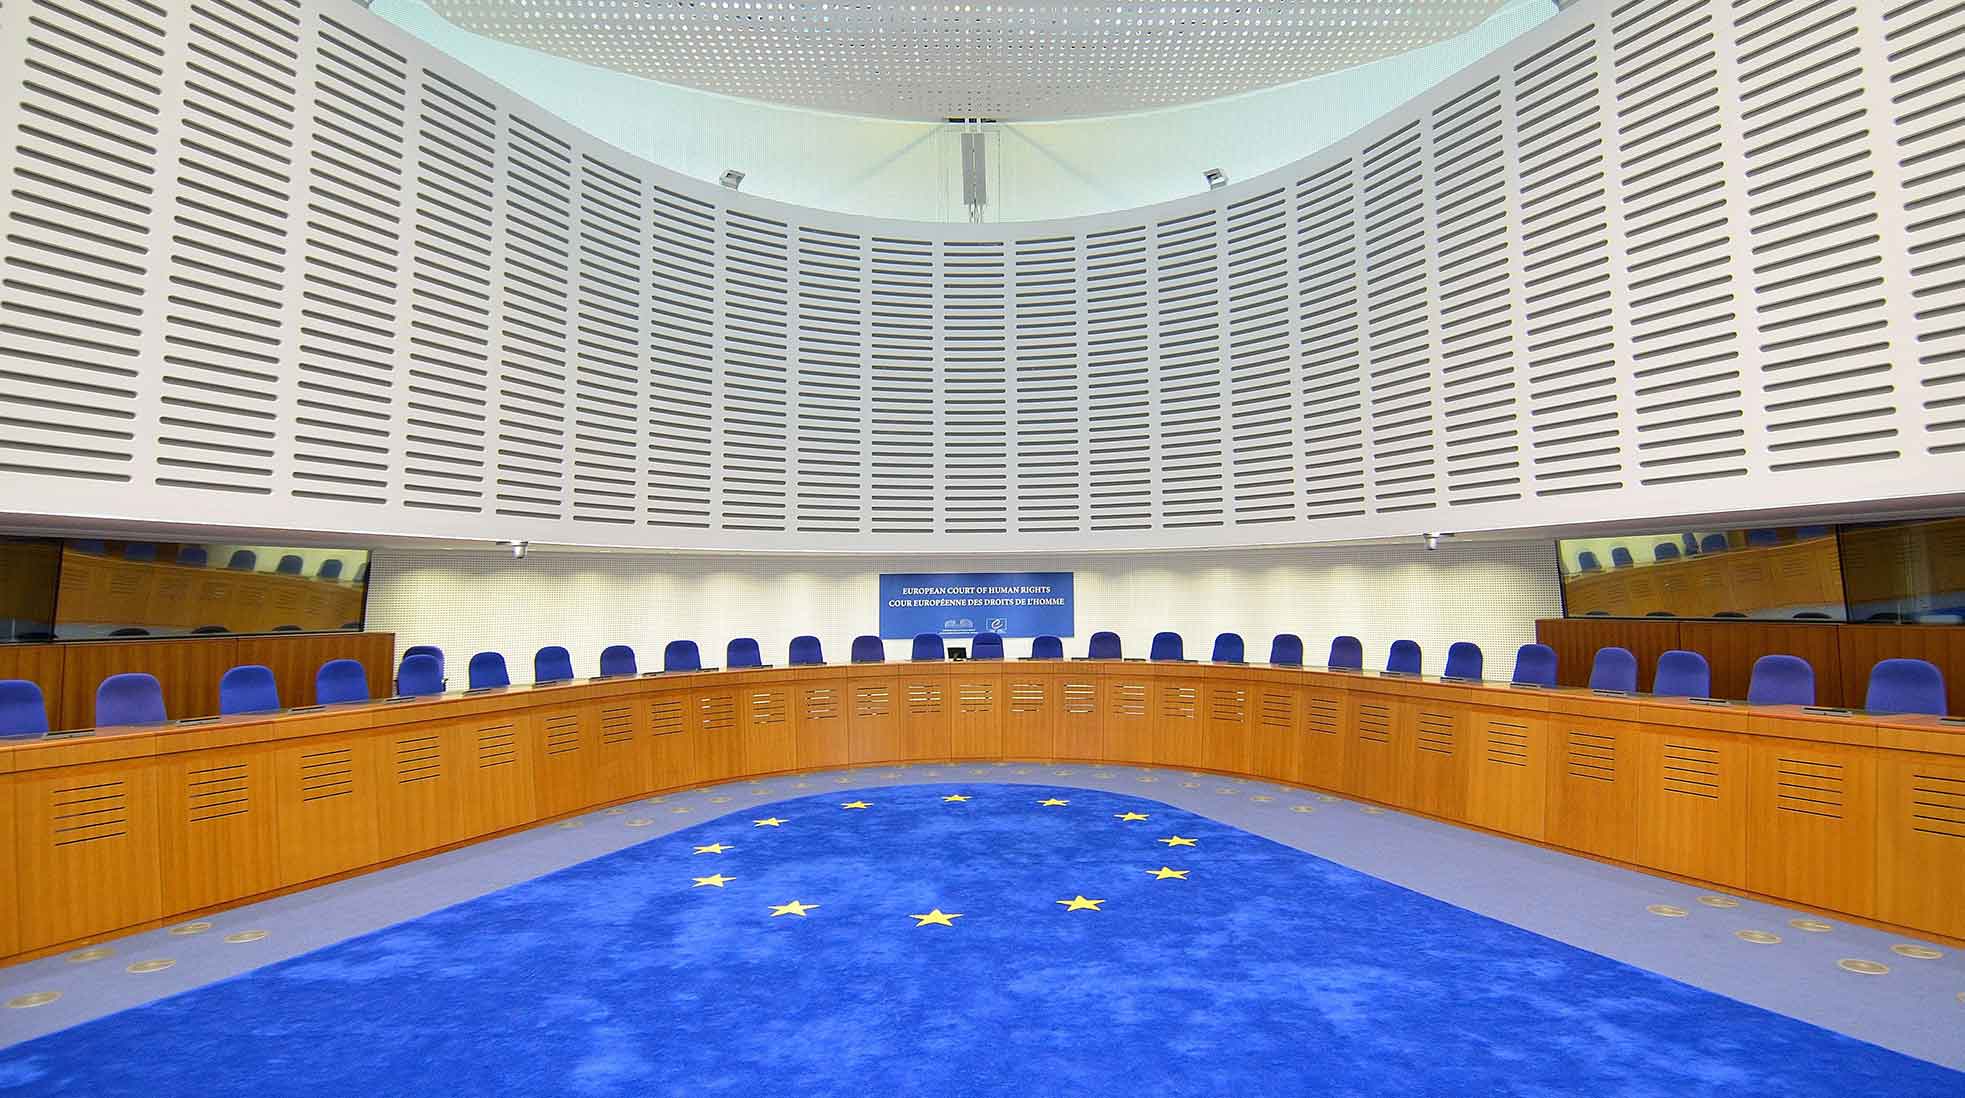 Europadomstolens rättssal i Strasbourg, Frankrike. Foto: Adrian Grycuk via Wikimedia Commons